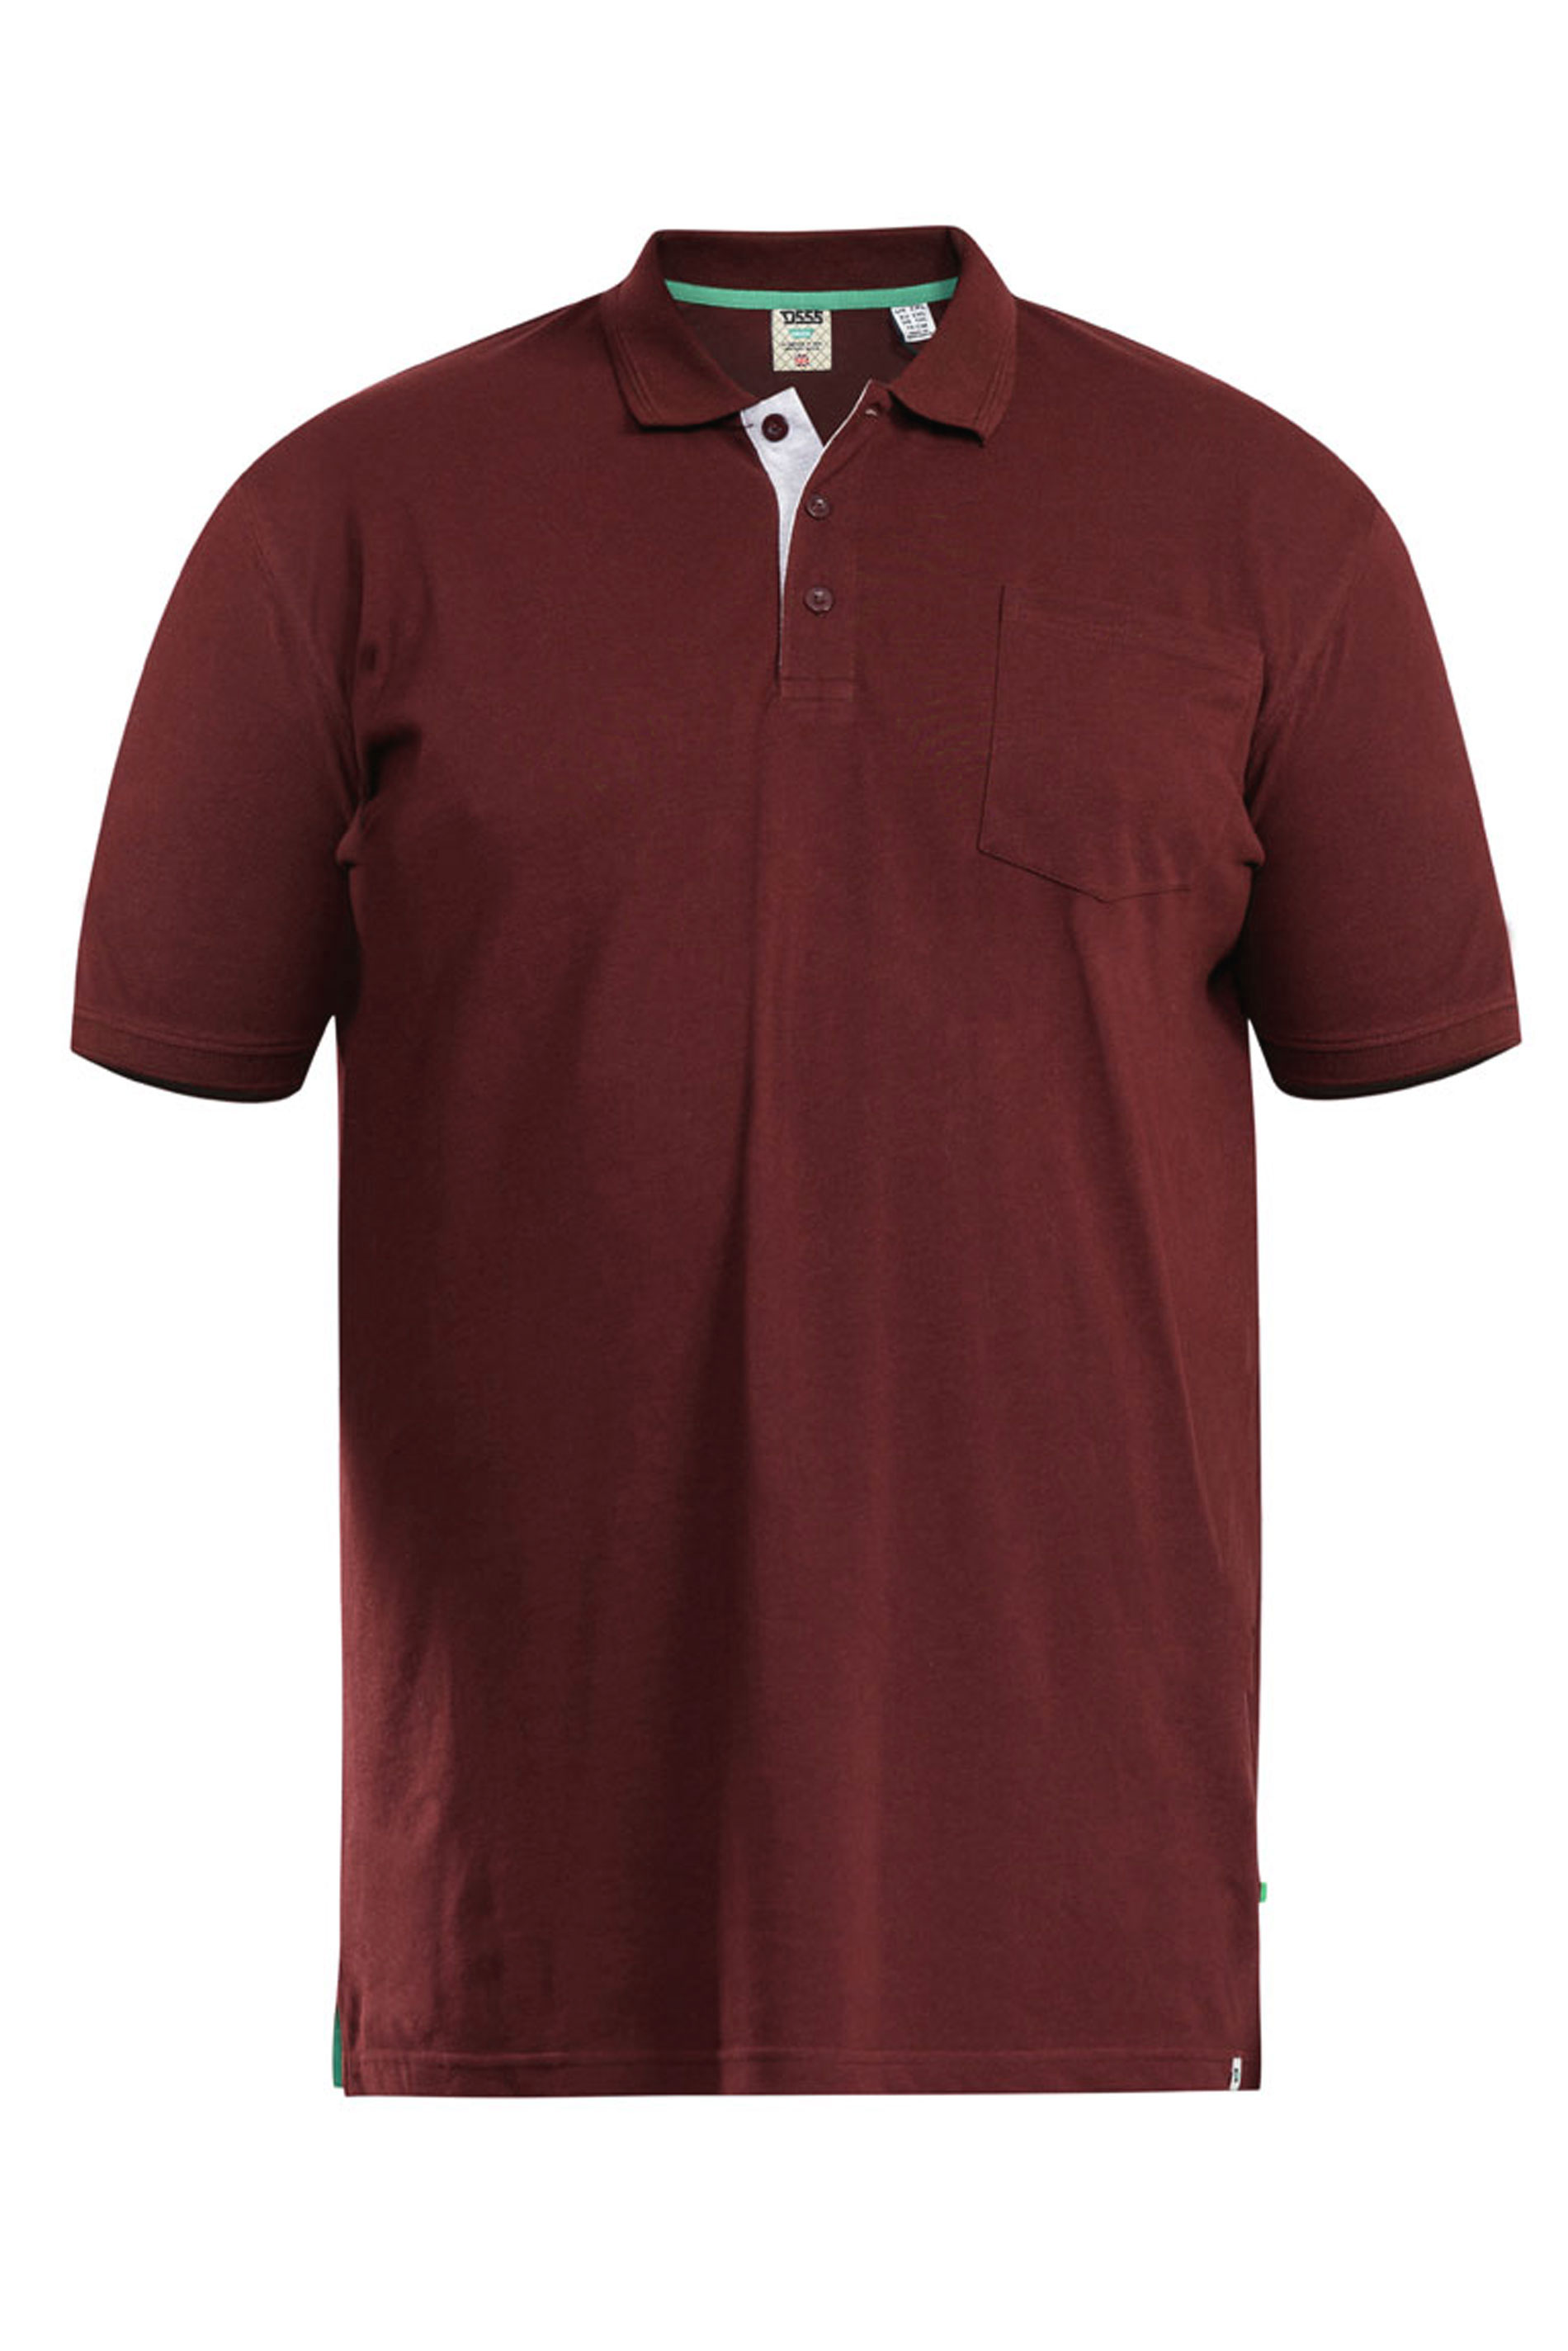 D555 Burgundy Basic Polo Shirt | BadRhino